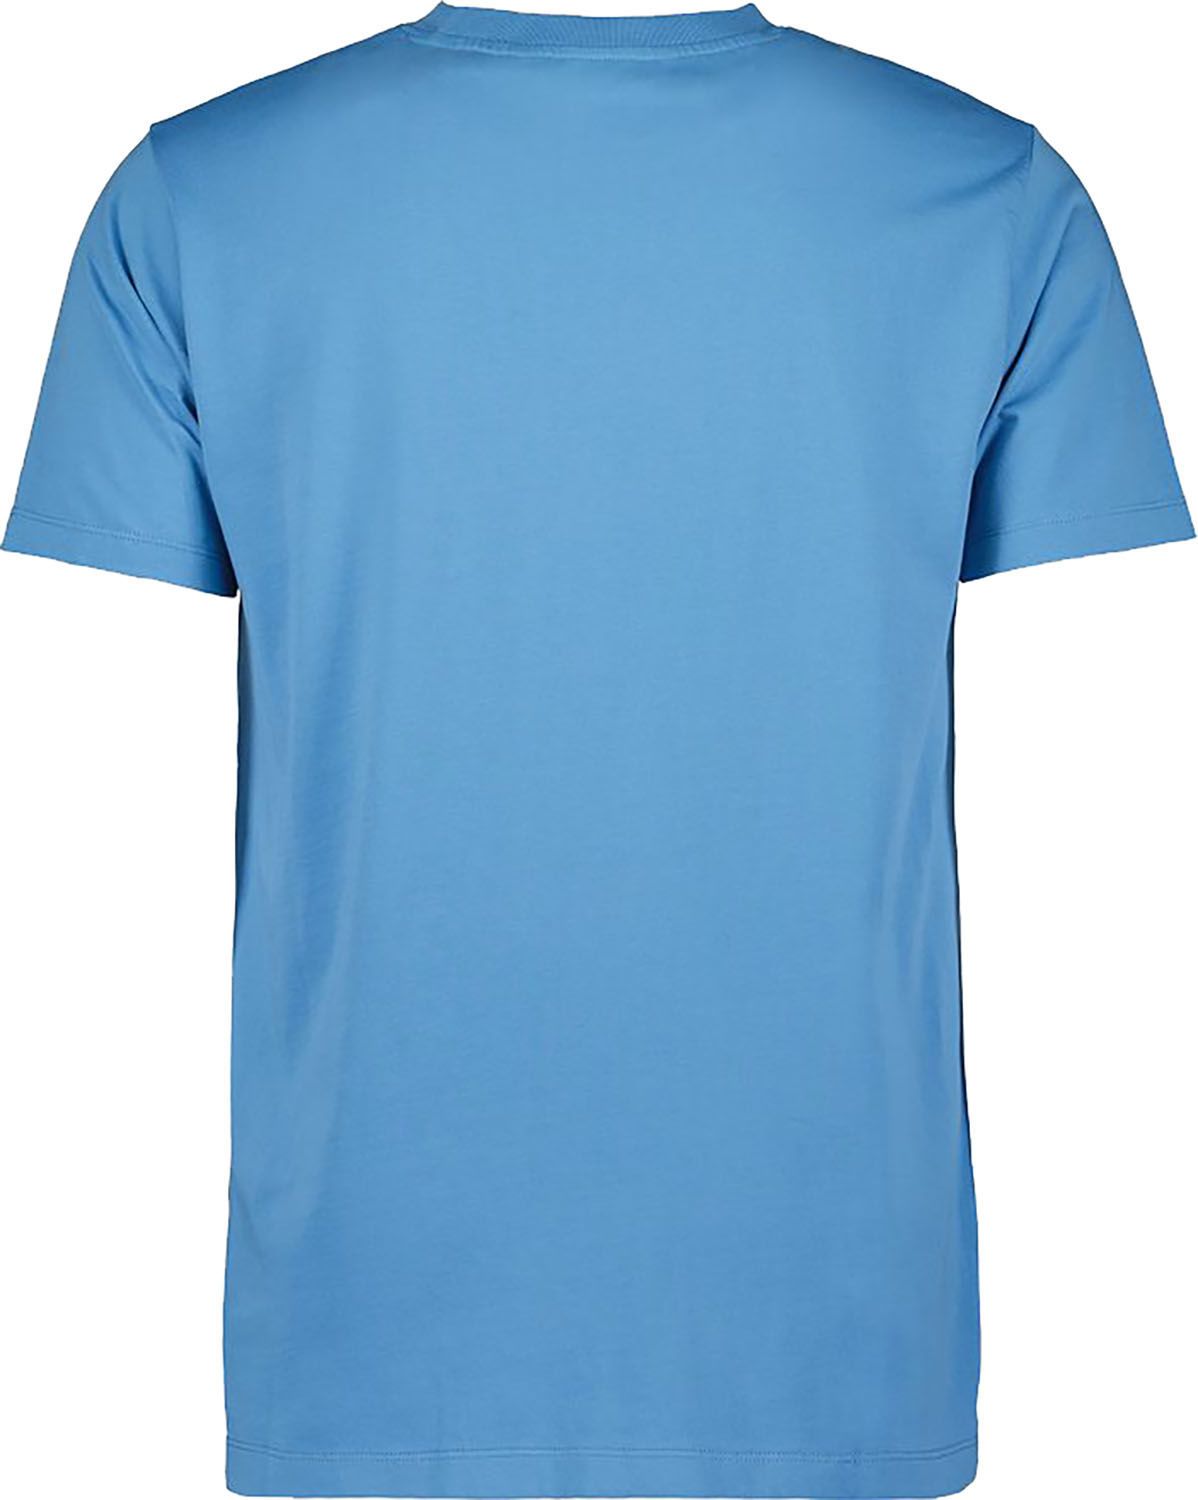 Airforce T-shirt Blauw